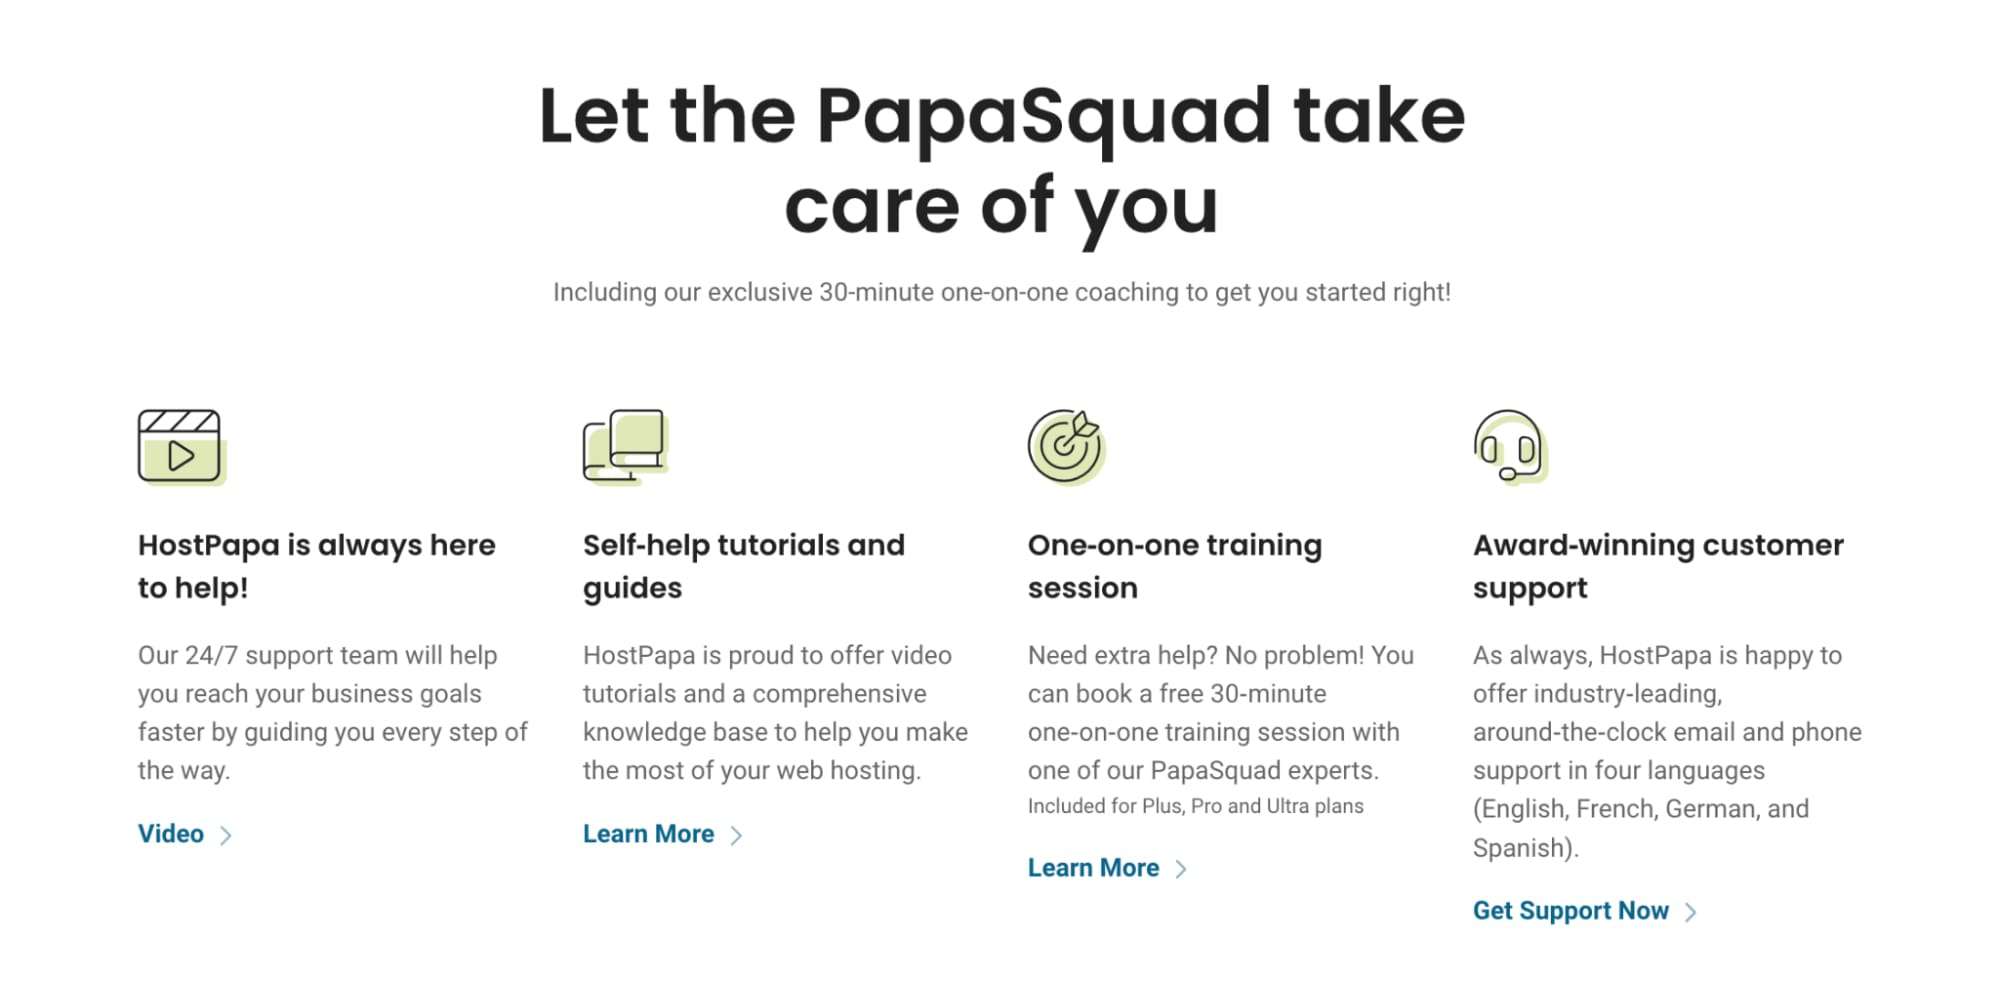 HostPapa has extensive support options